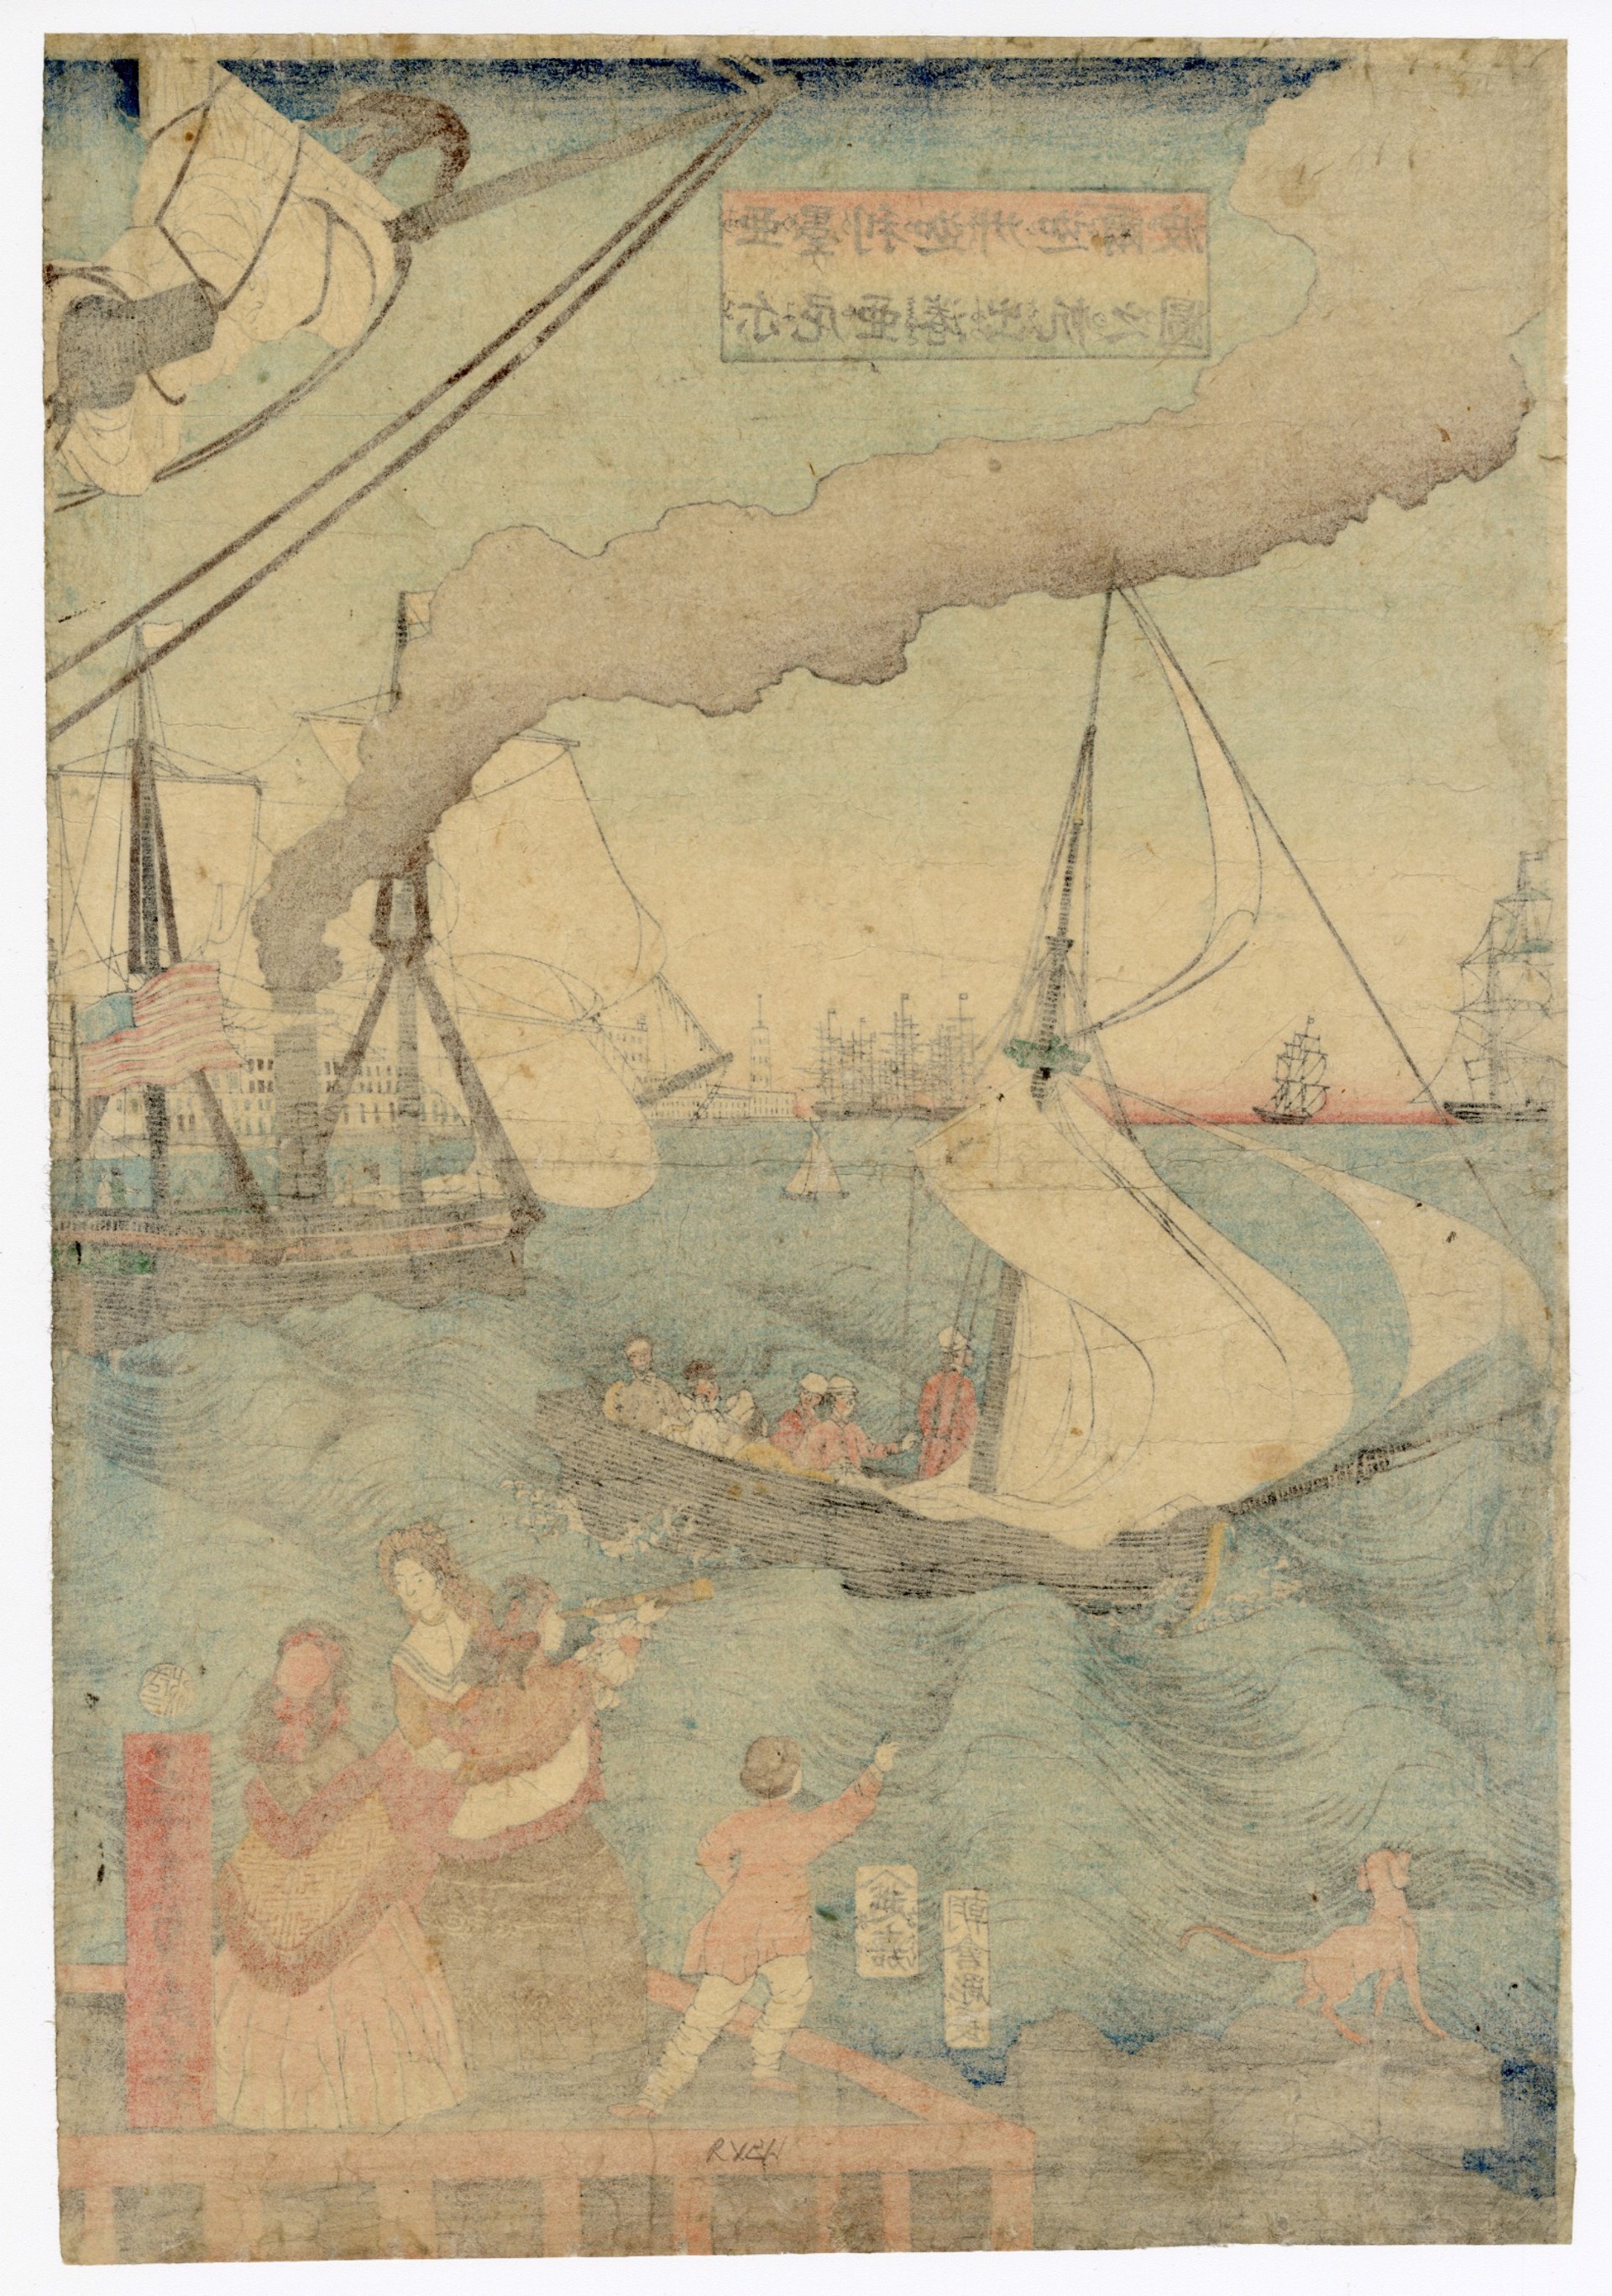 Black Ships Departing California for Japan by Sadahide